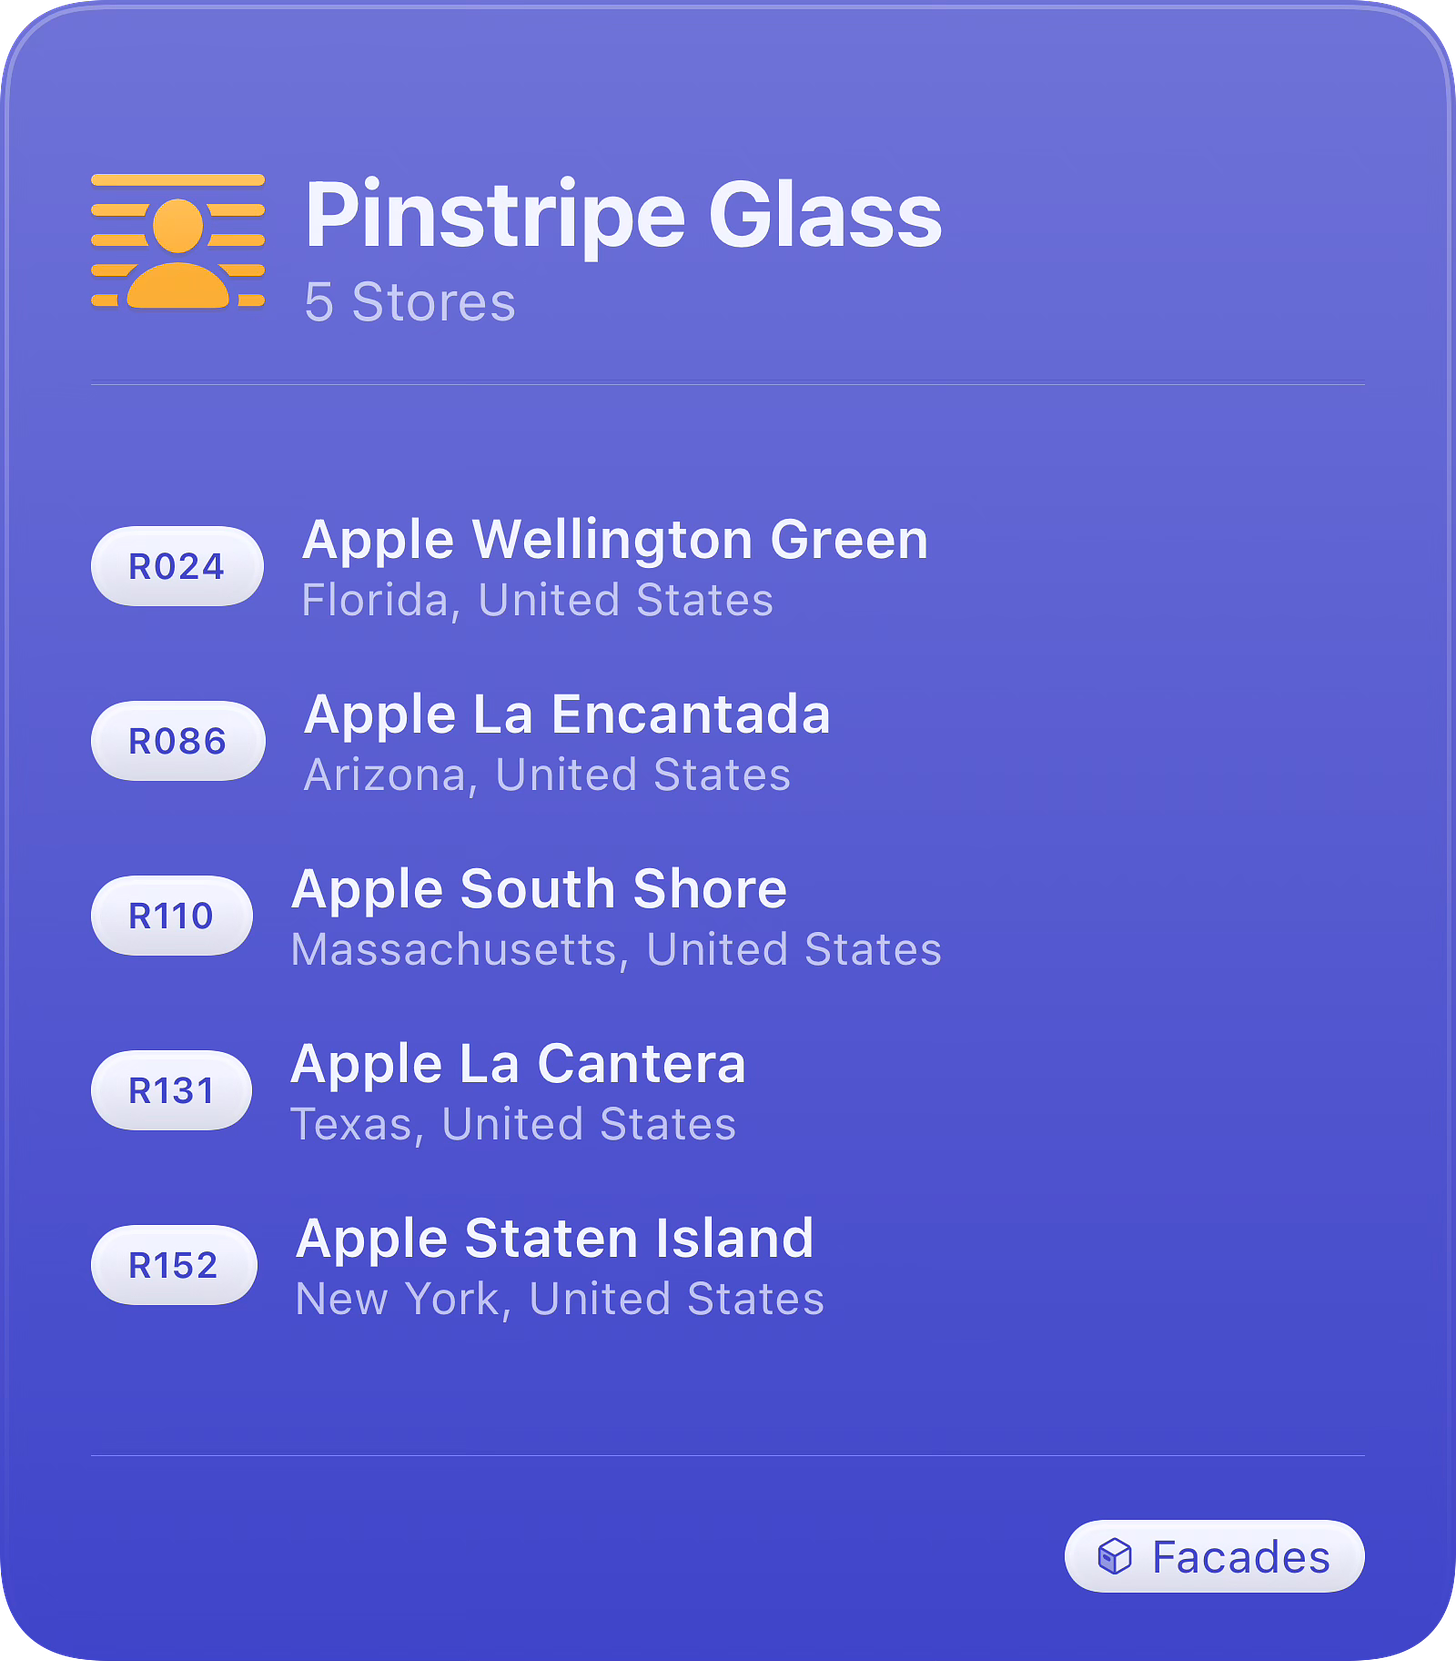 La Encantada - Apple Store - Apple